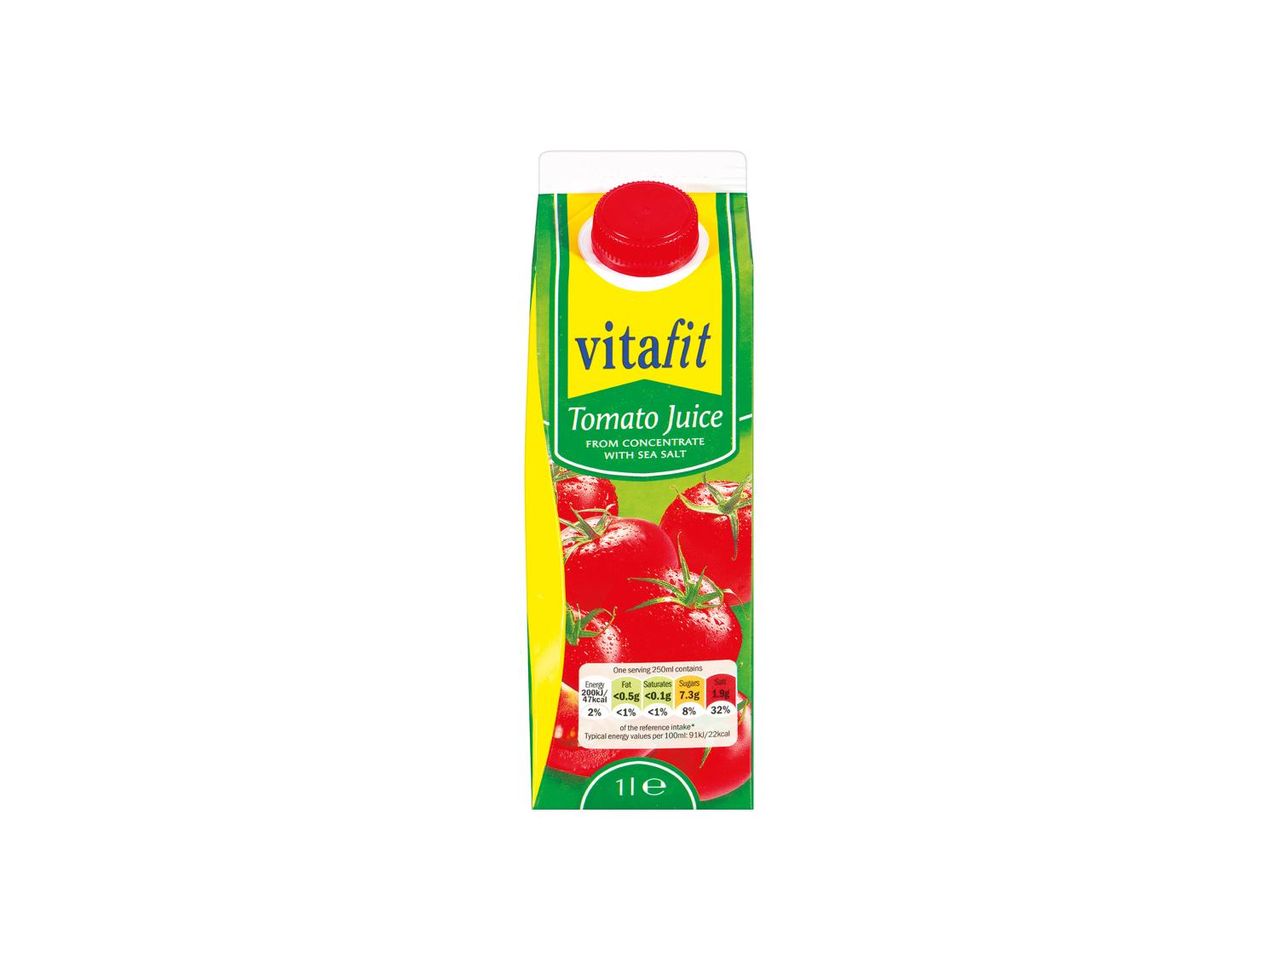 Go to full screen view: Vitafit Tomato Juice - Image 1